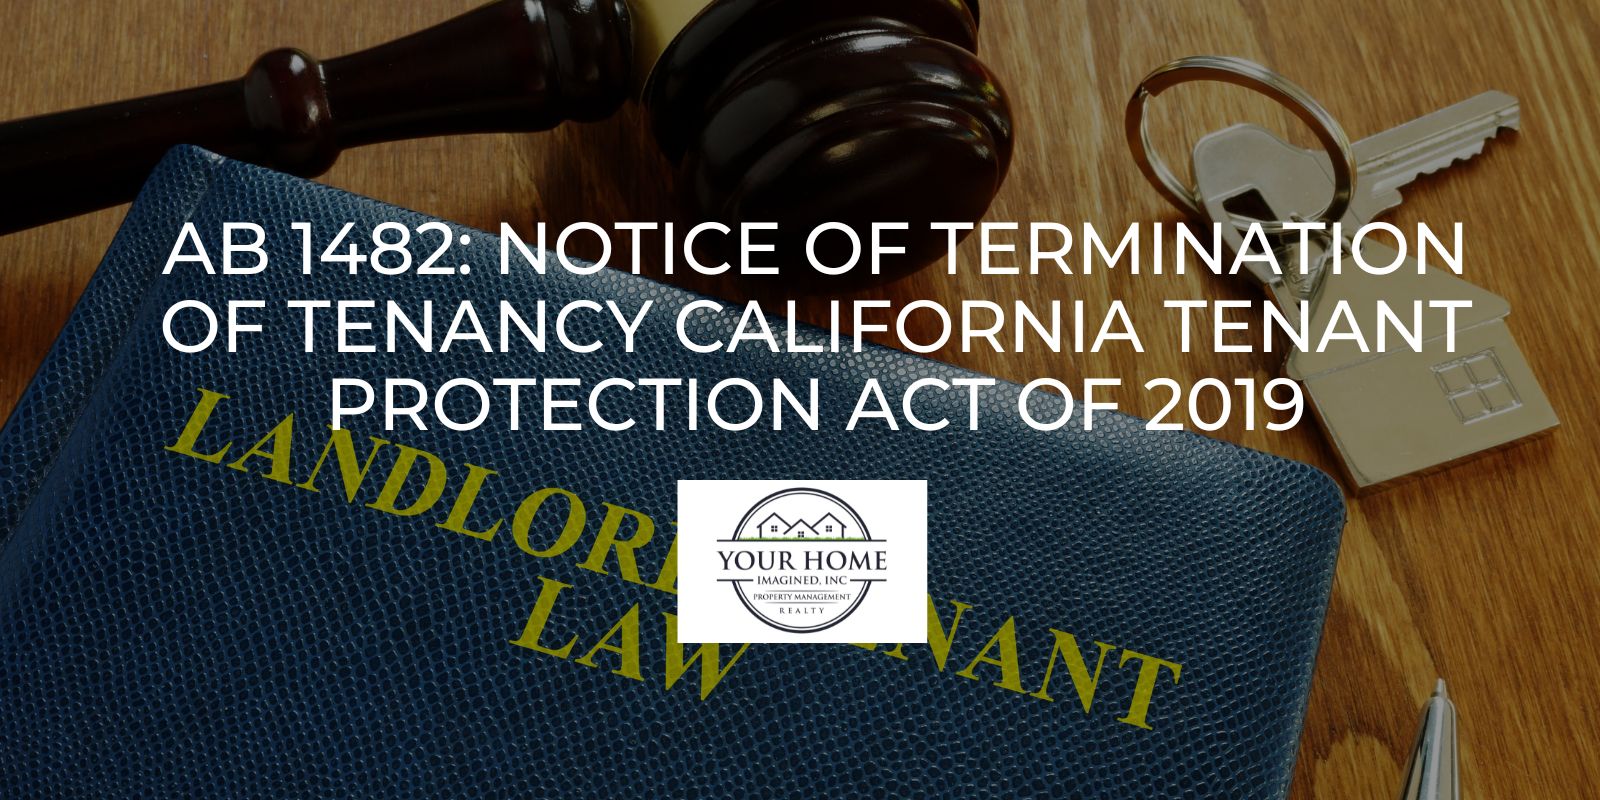 AB 1482 Notice Of Termination Of Tenancy California Tenant Protection